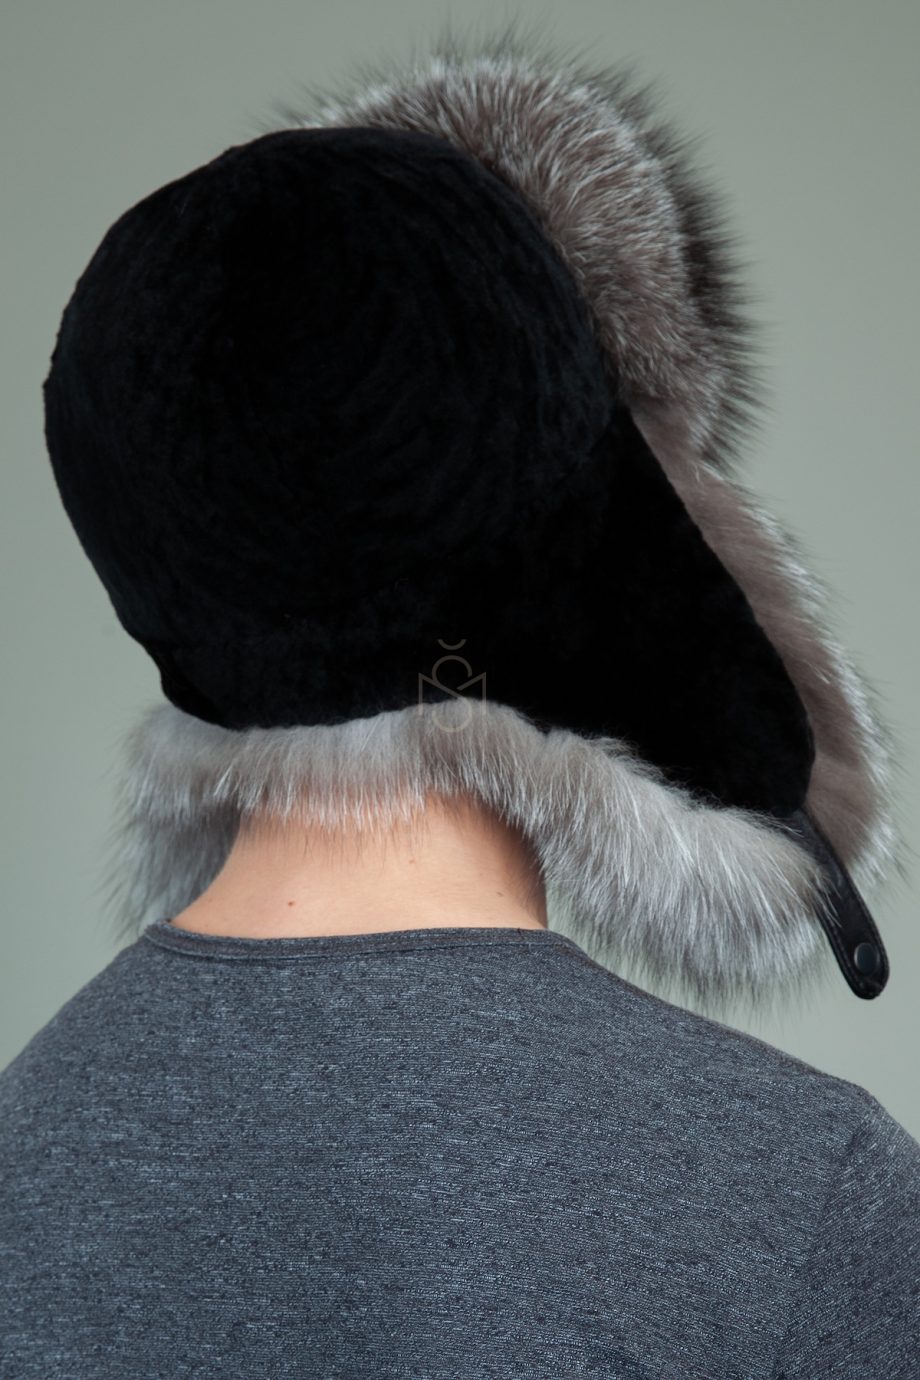 juodo avikailio ir juodsidabres lapes kepure su susegamomis ausimis